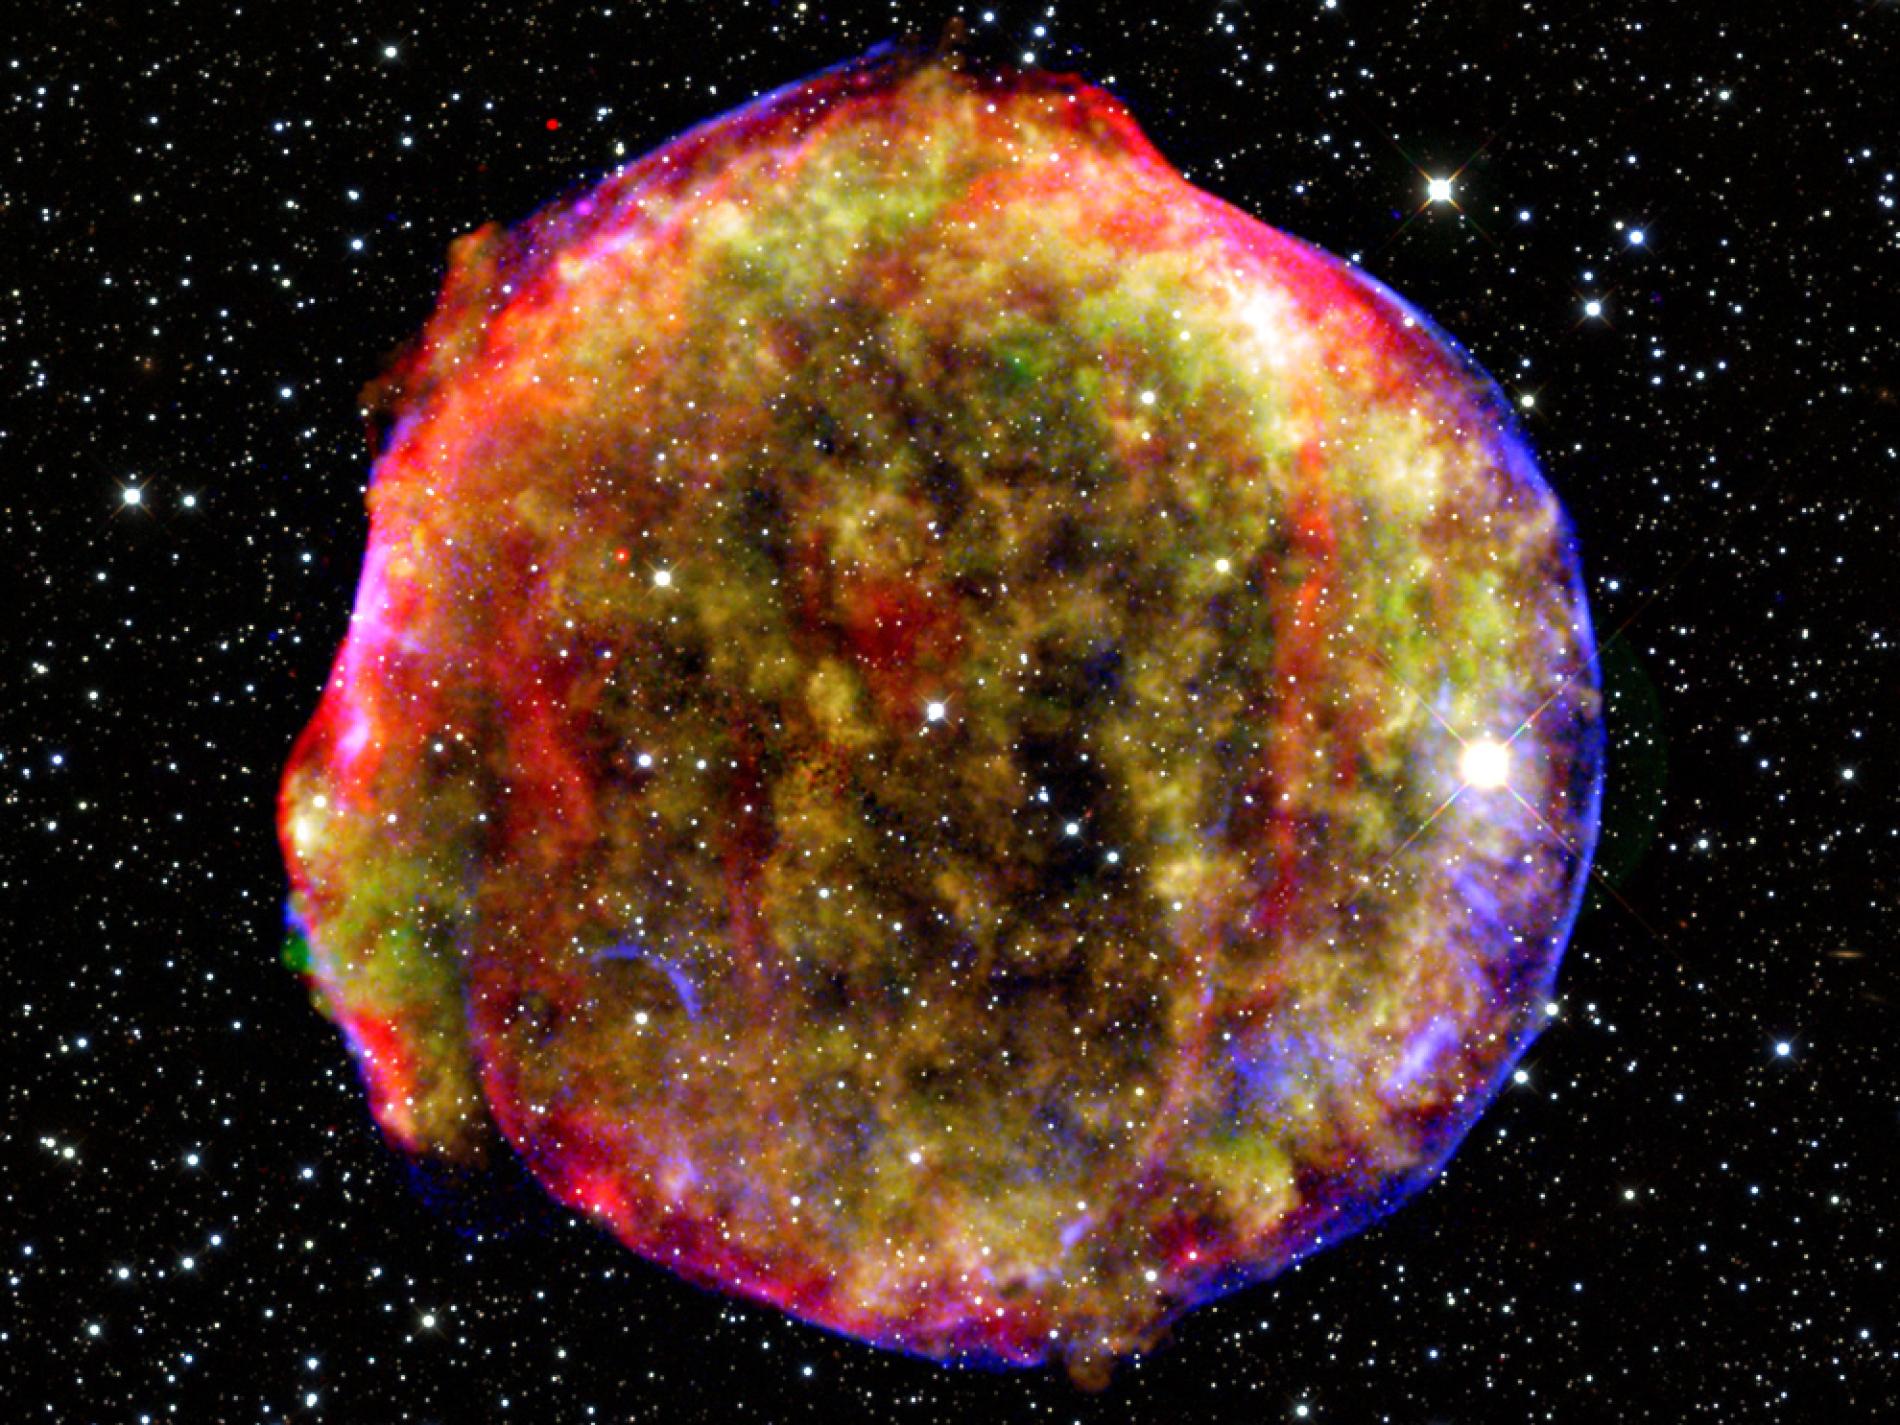 supernova Tycho